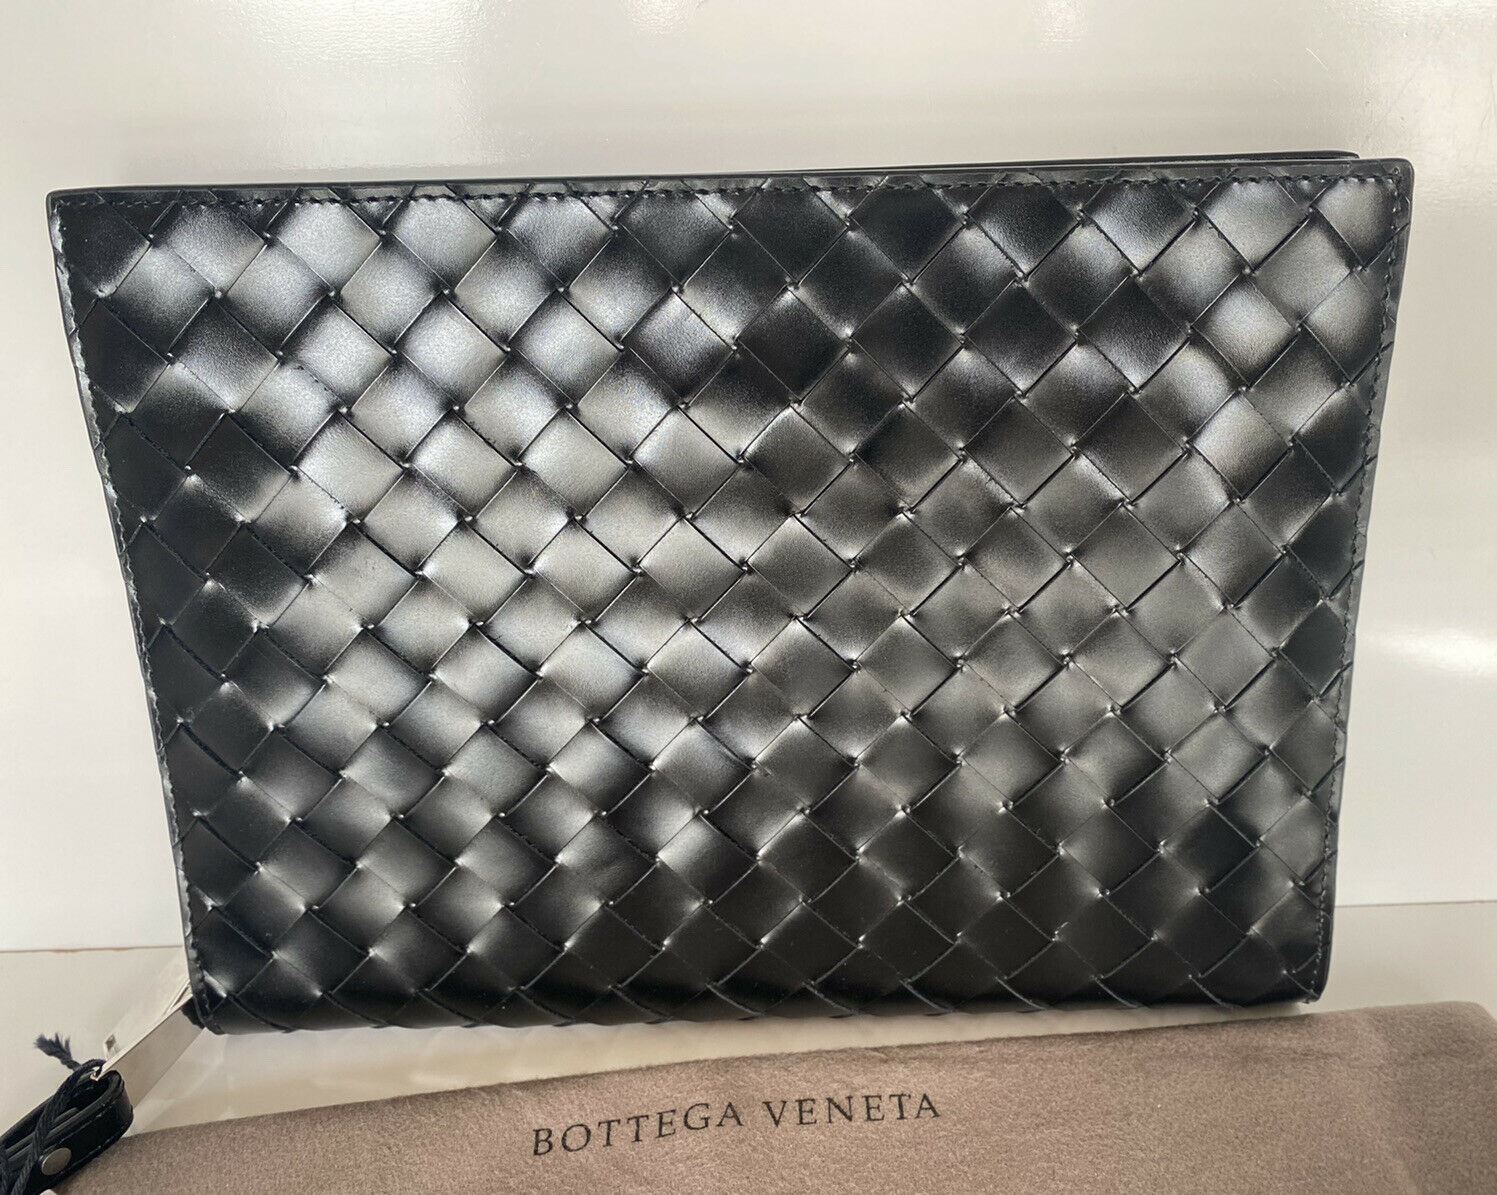 Bottega Veneta® Small Intrecciato Document Case in Acorn. Shop online now.